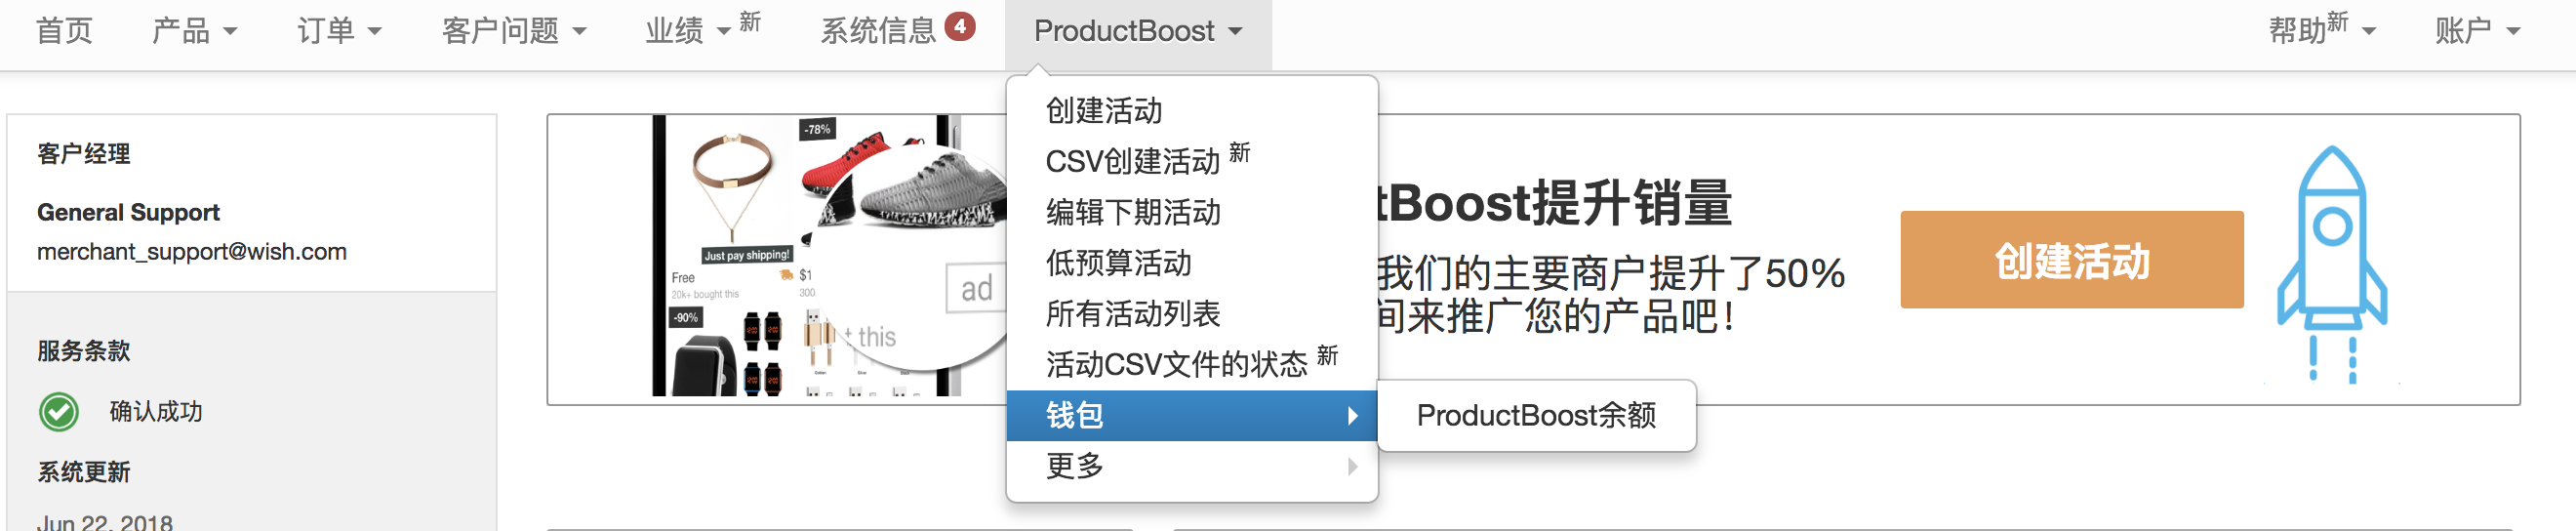 wish ProductBoost广告如何充值？附ProductBoost充值常见问题